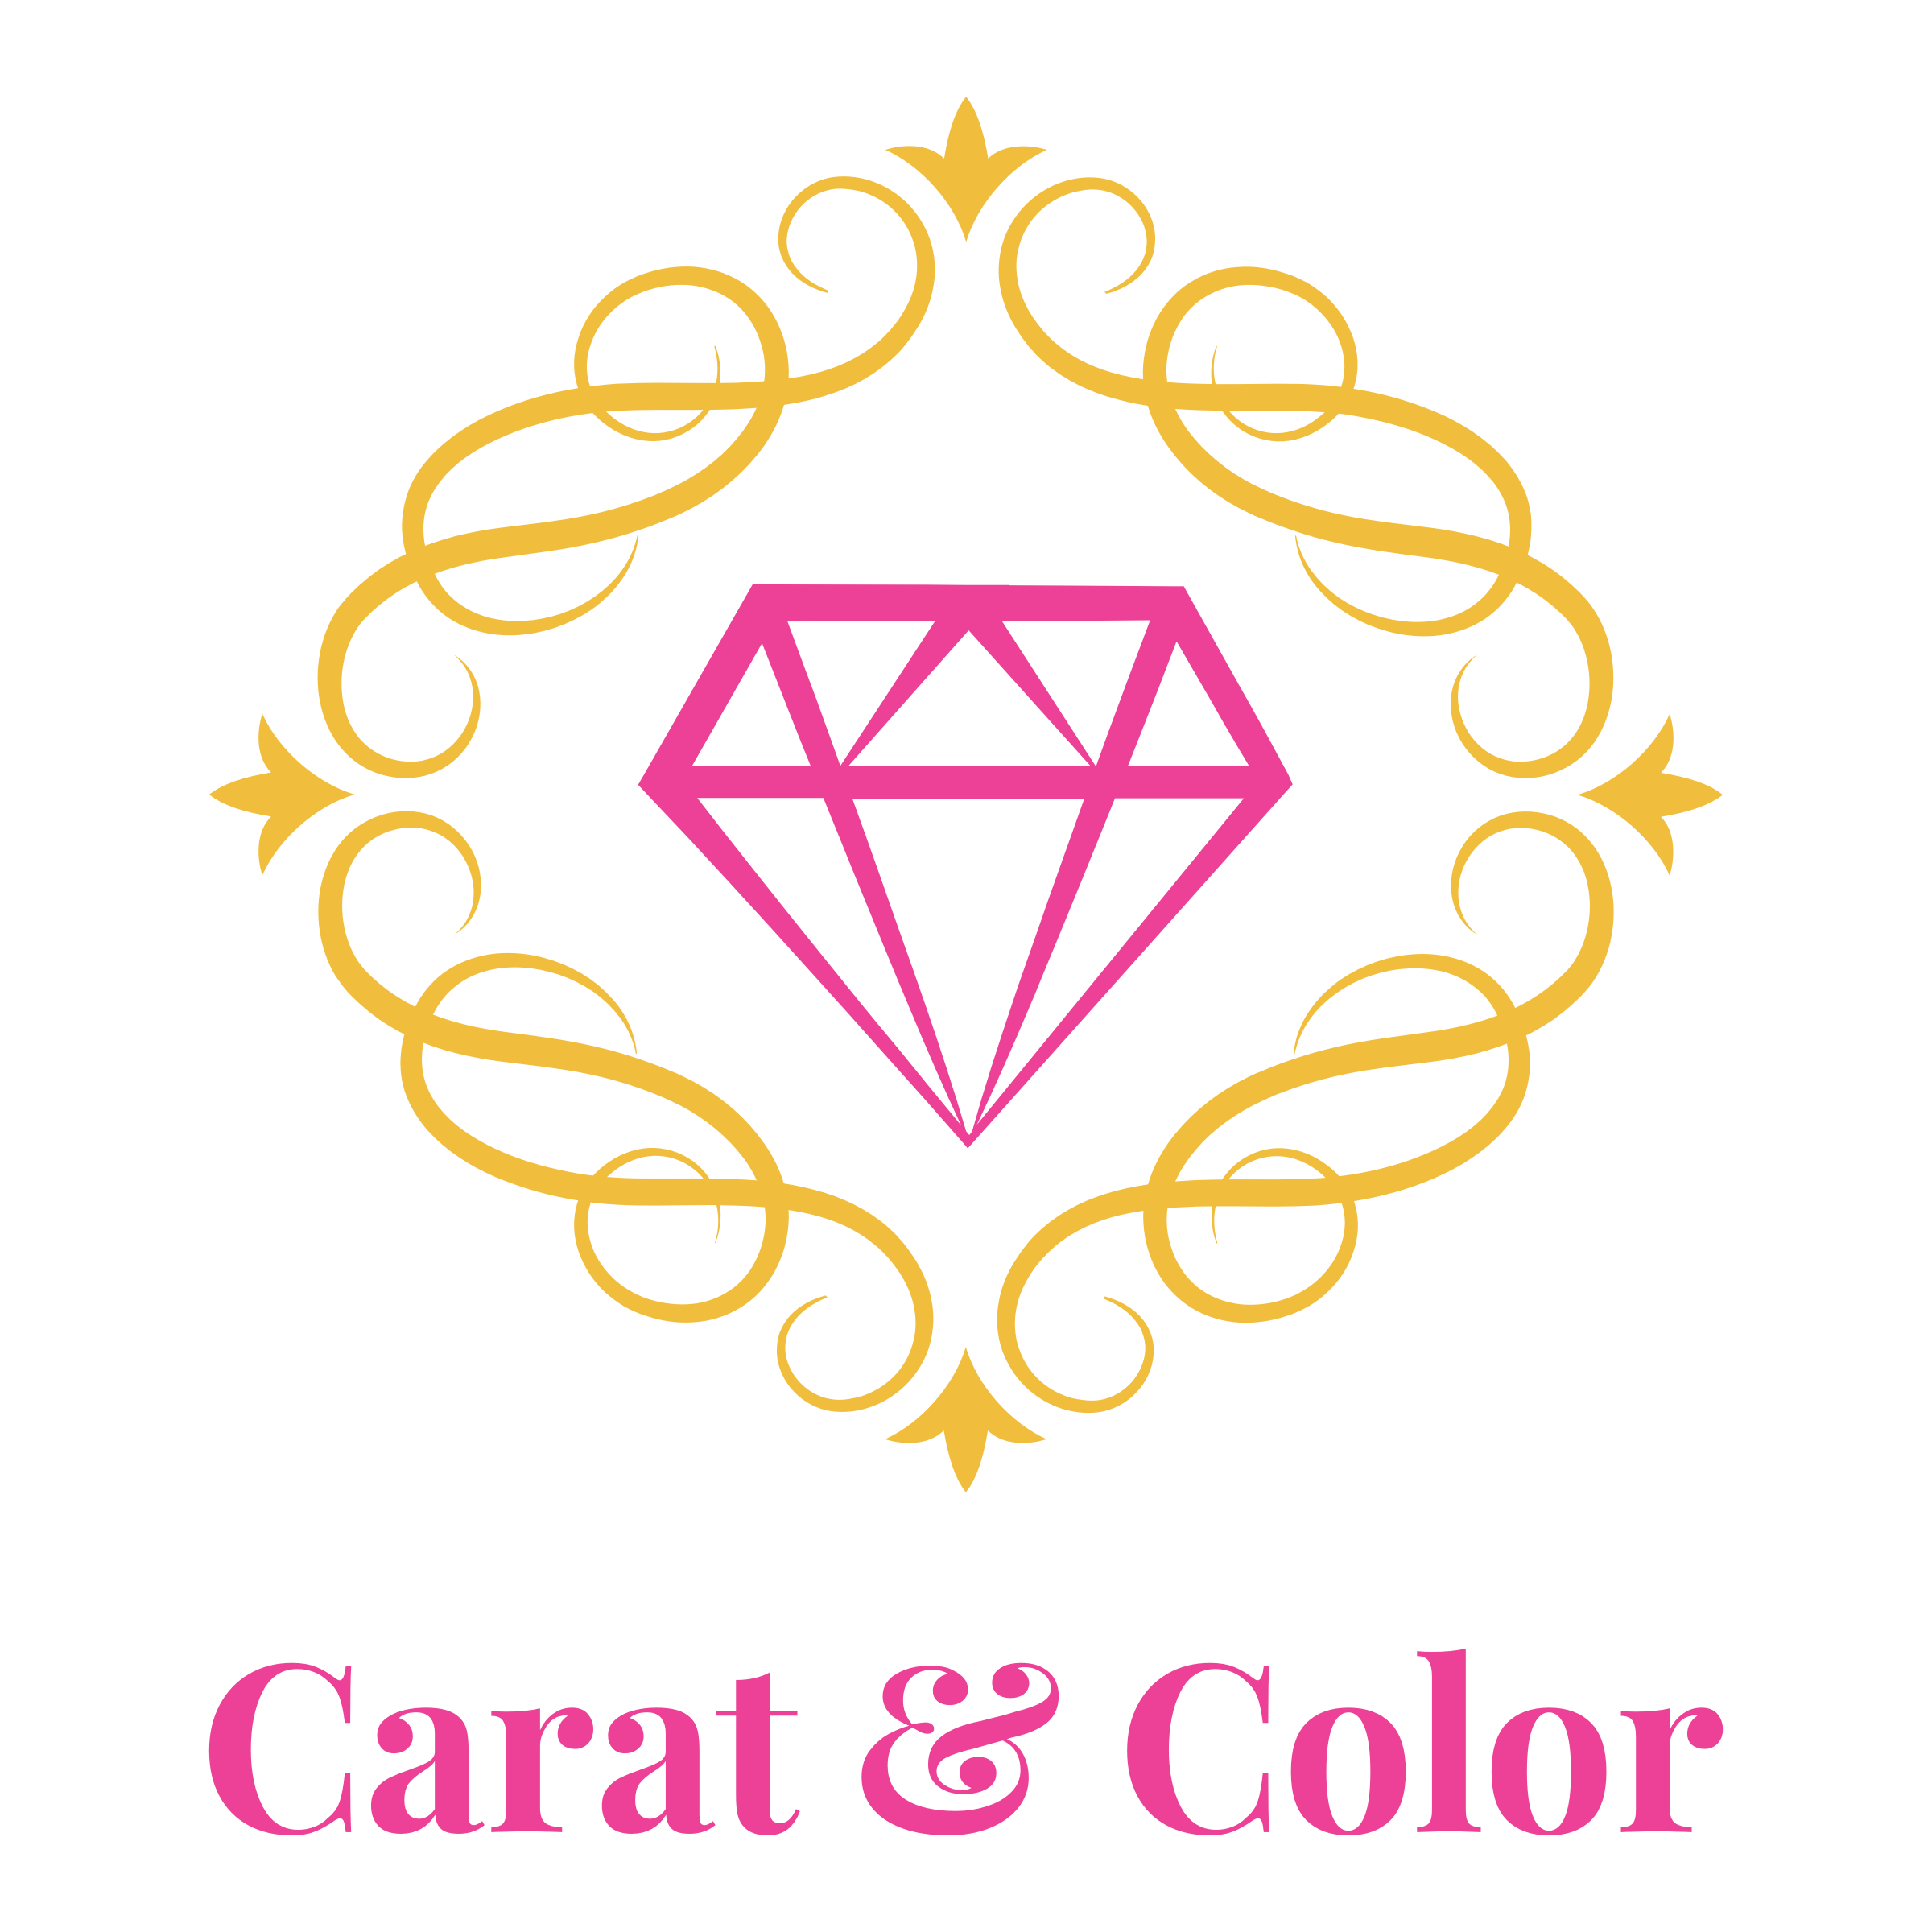 diamond logo images